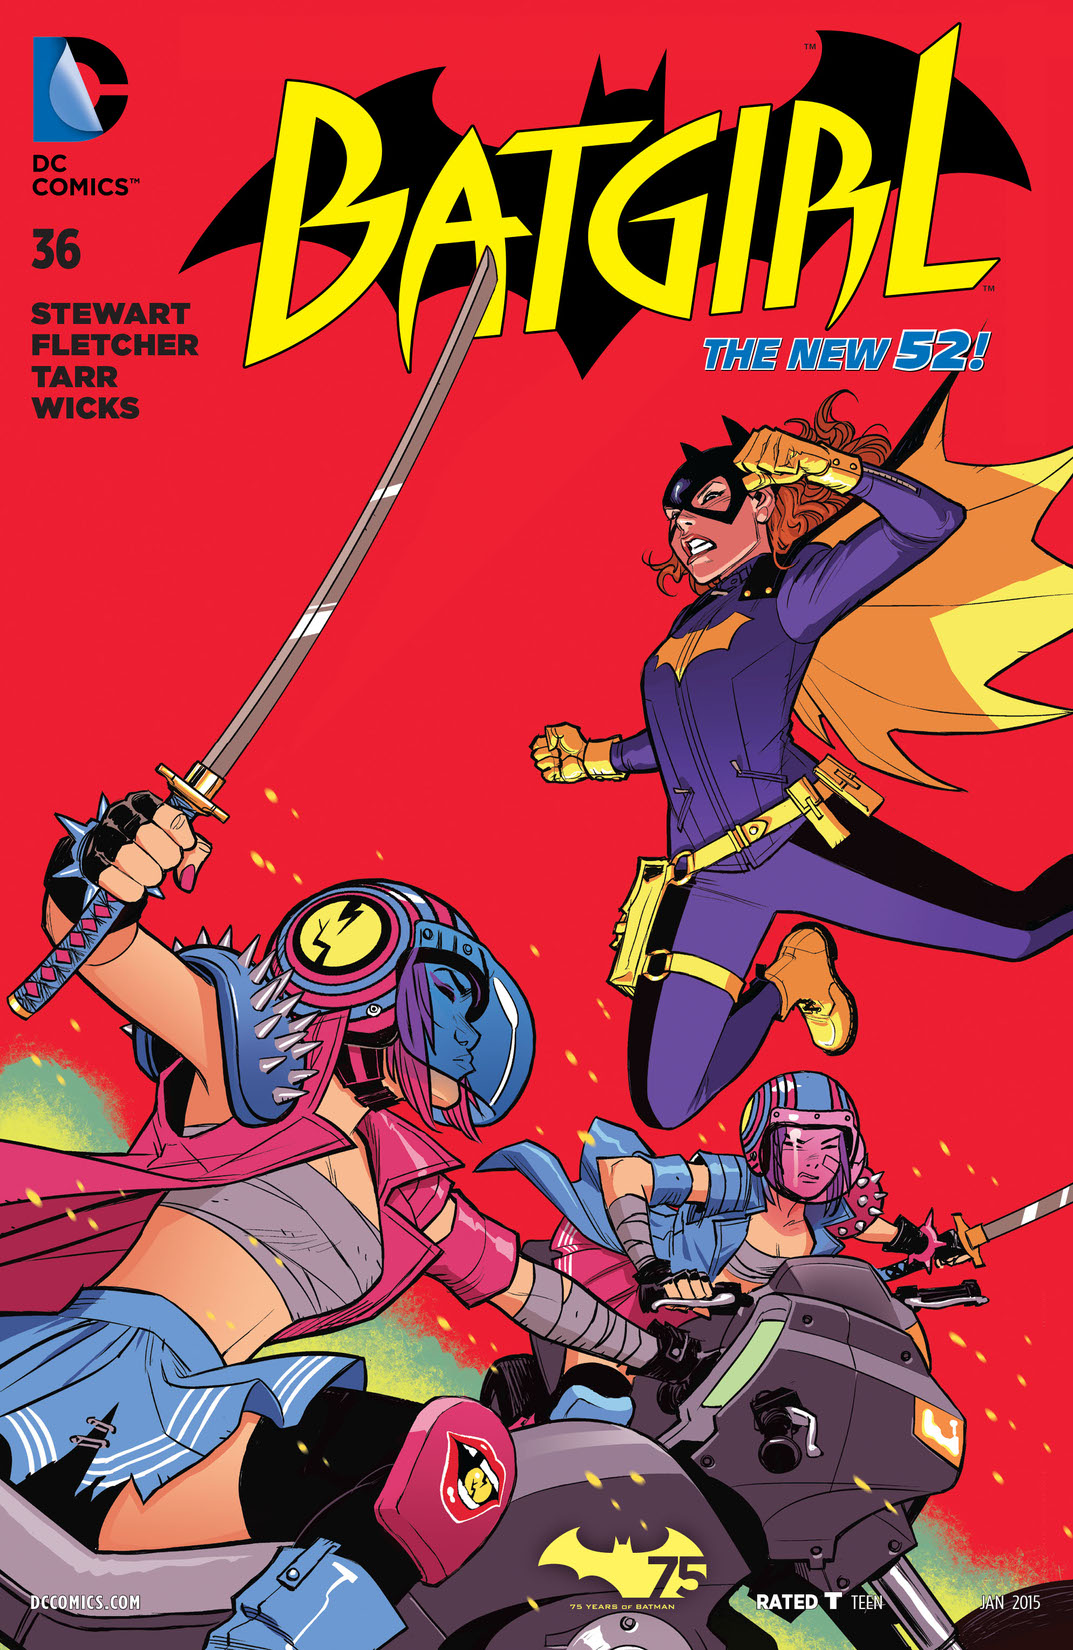 Batgirl (2011-) #36 preview images